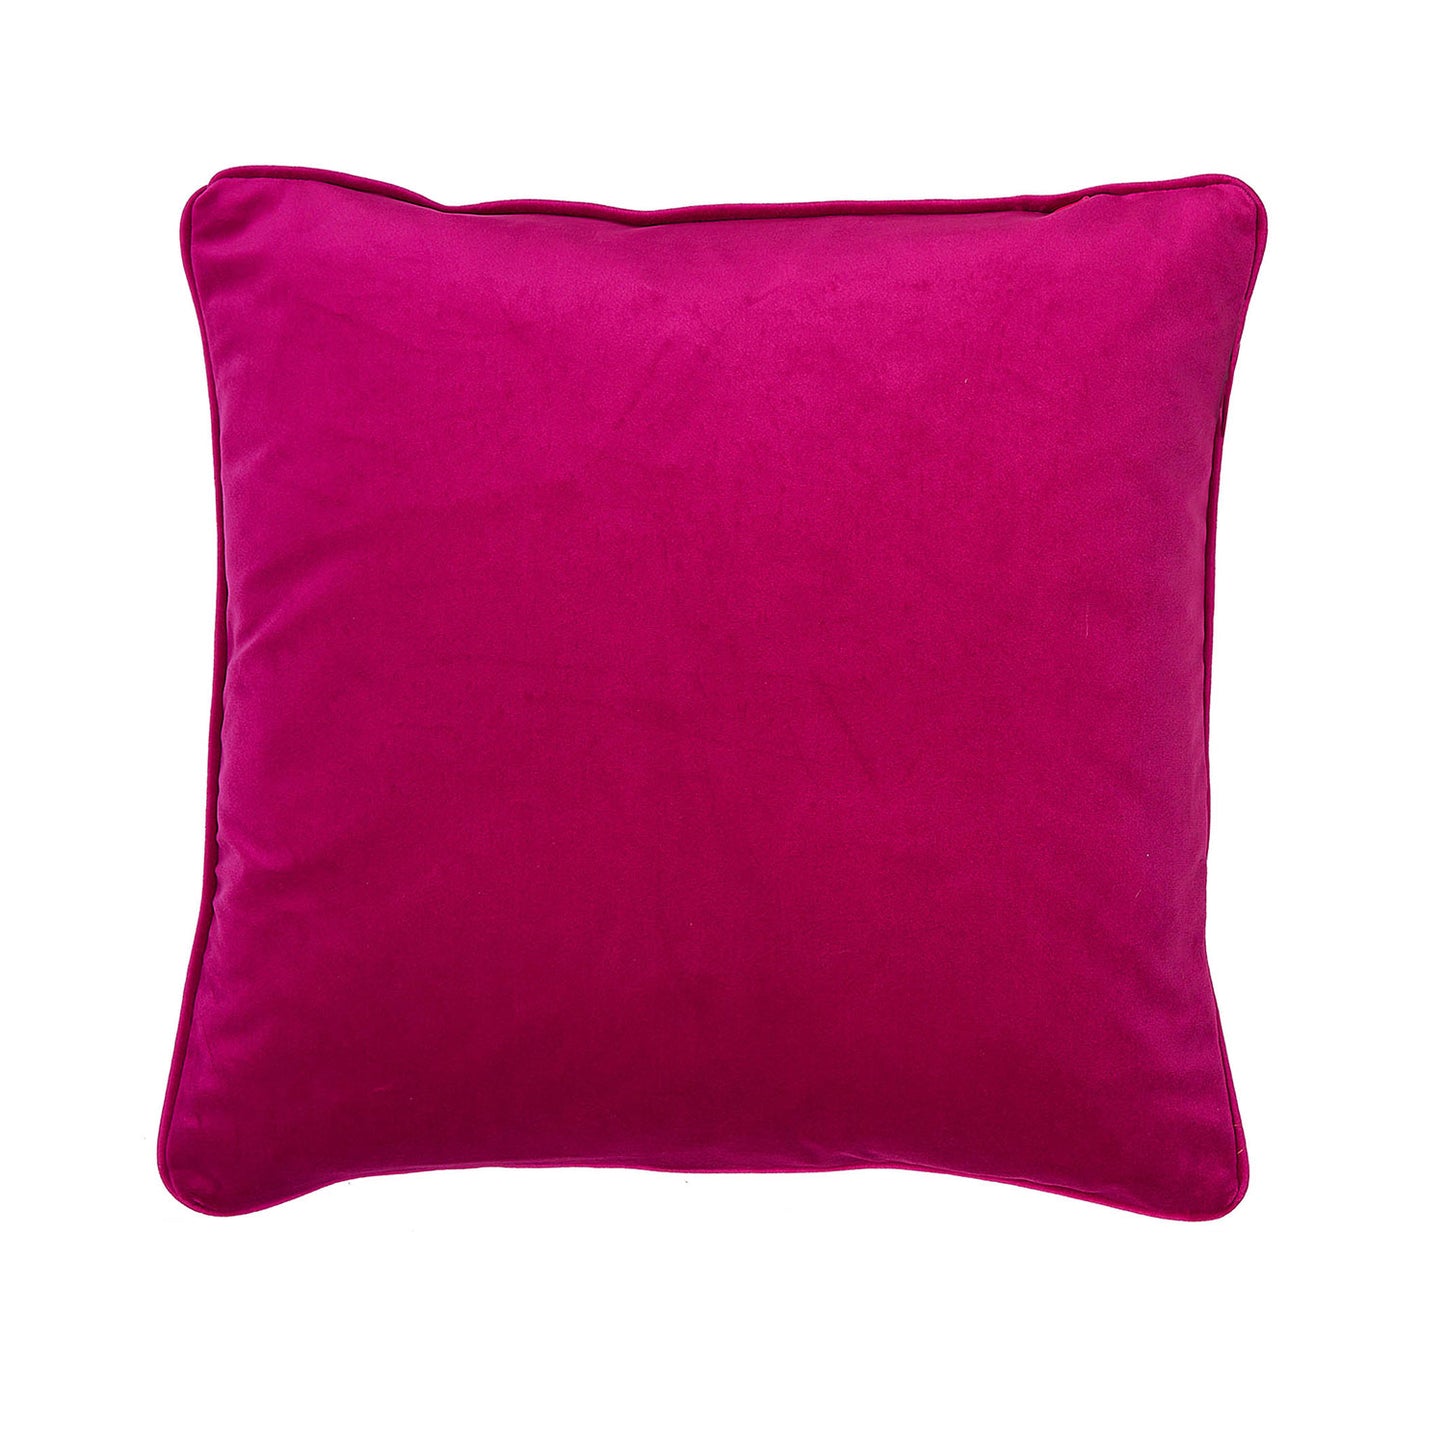 Clarissa Hulse Rue Sunset Velvet Cushion (43cm x 43cm)